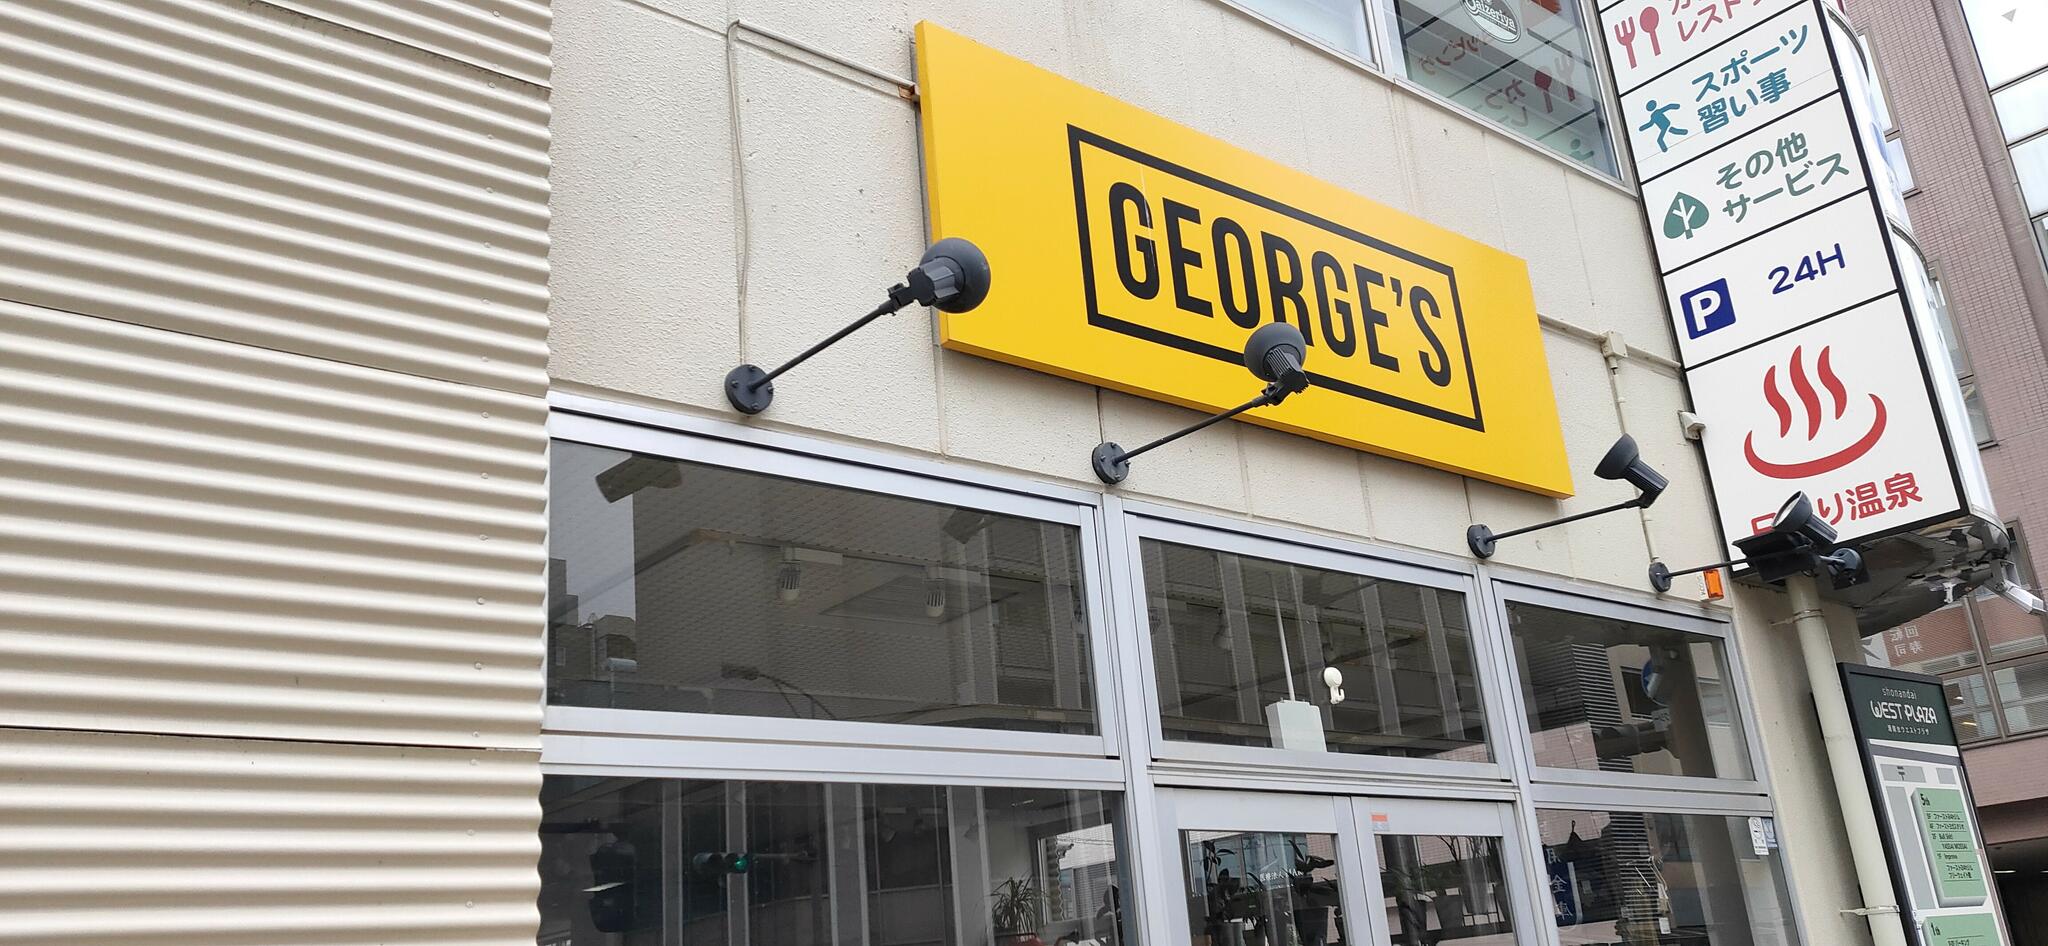 George's 湘南台店の代表写真1